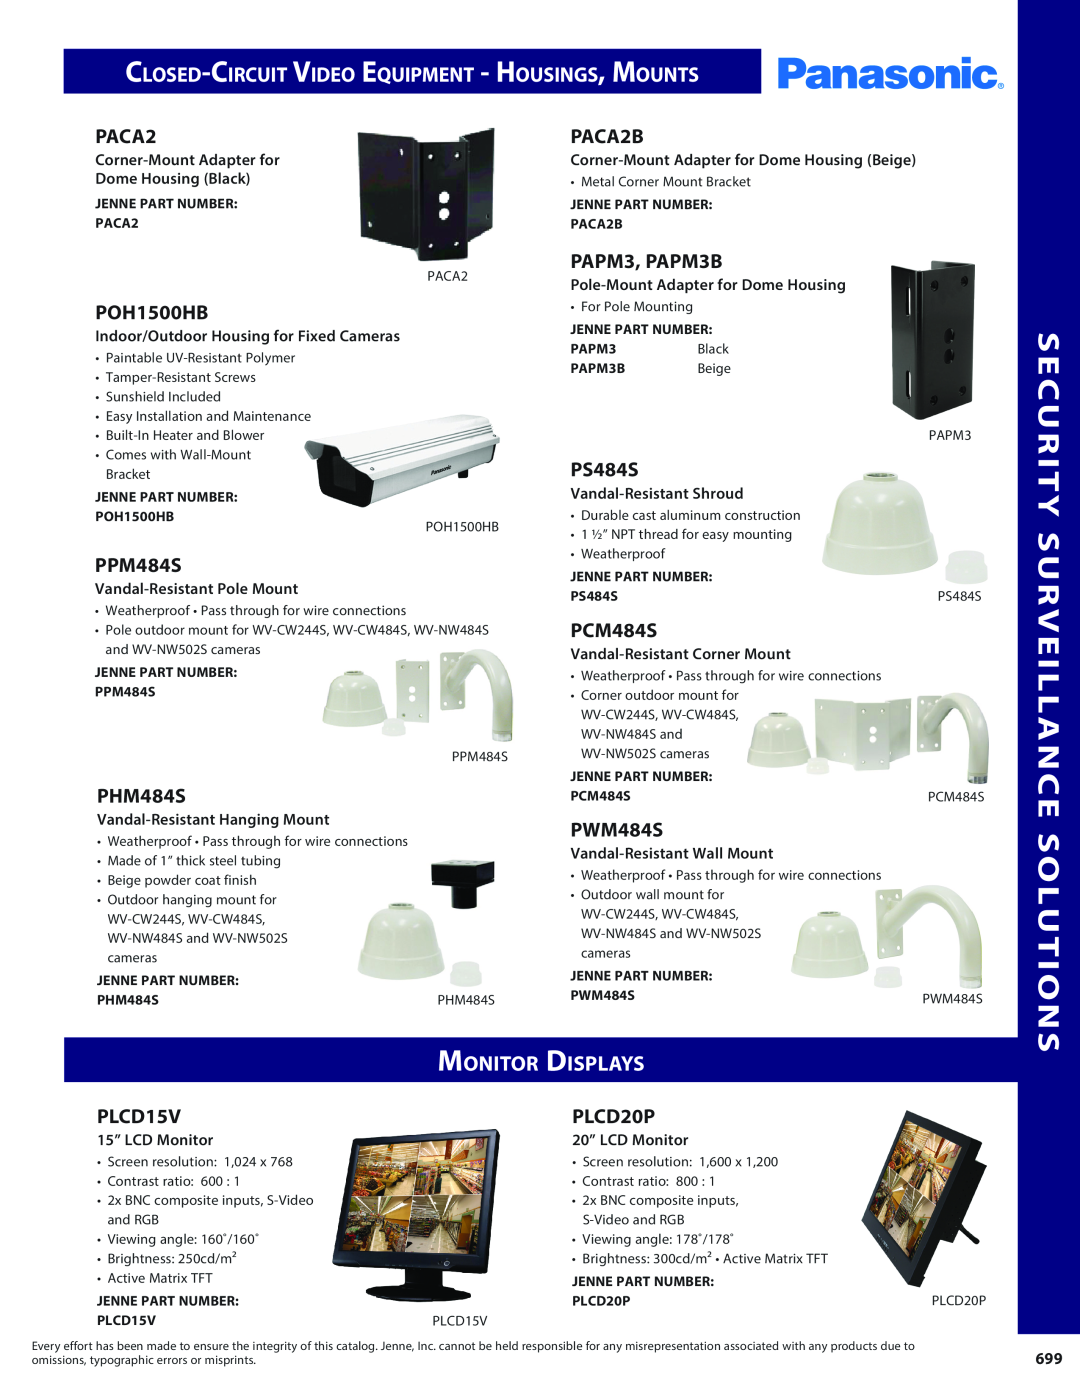 Panasonic PMPU2000 Security Surveillance Solutions, Closed-Circuit Video Equipment - Housings, Mounts, Monitor Displays 